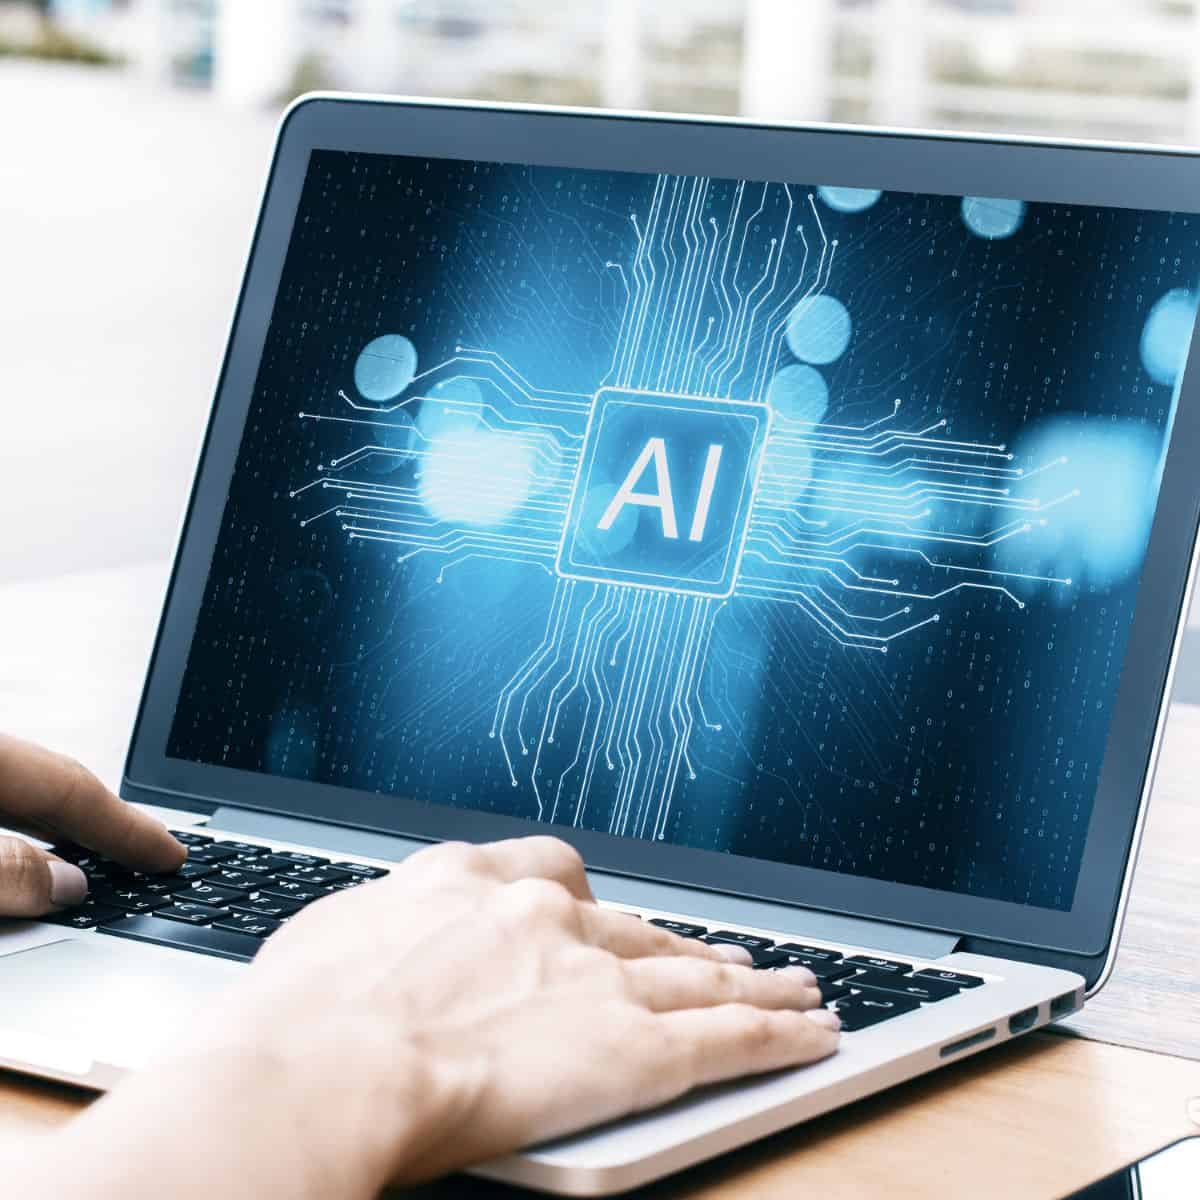 AI on laptop screen